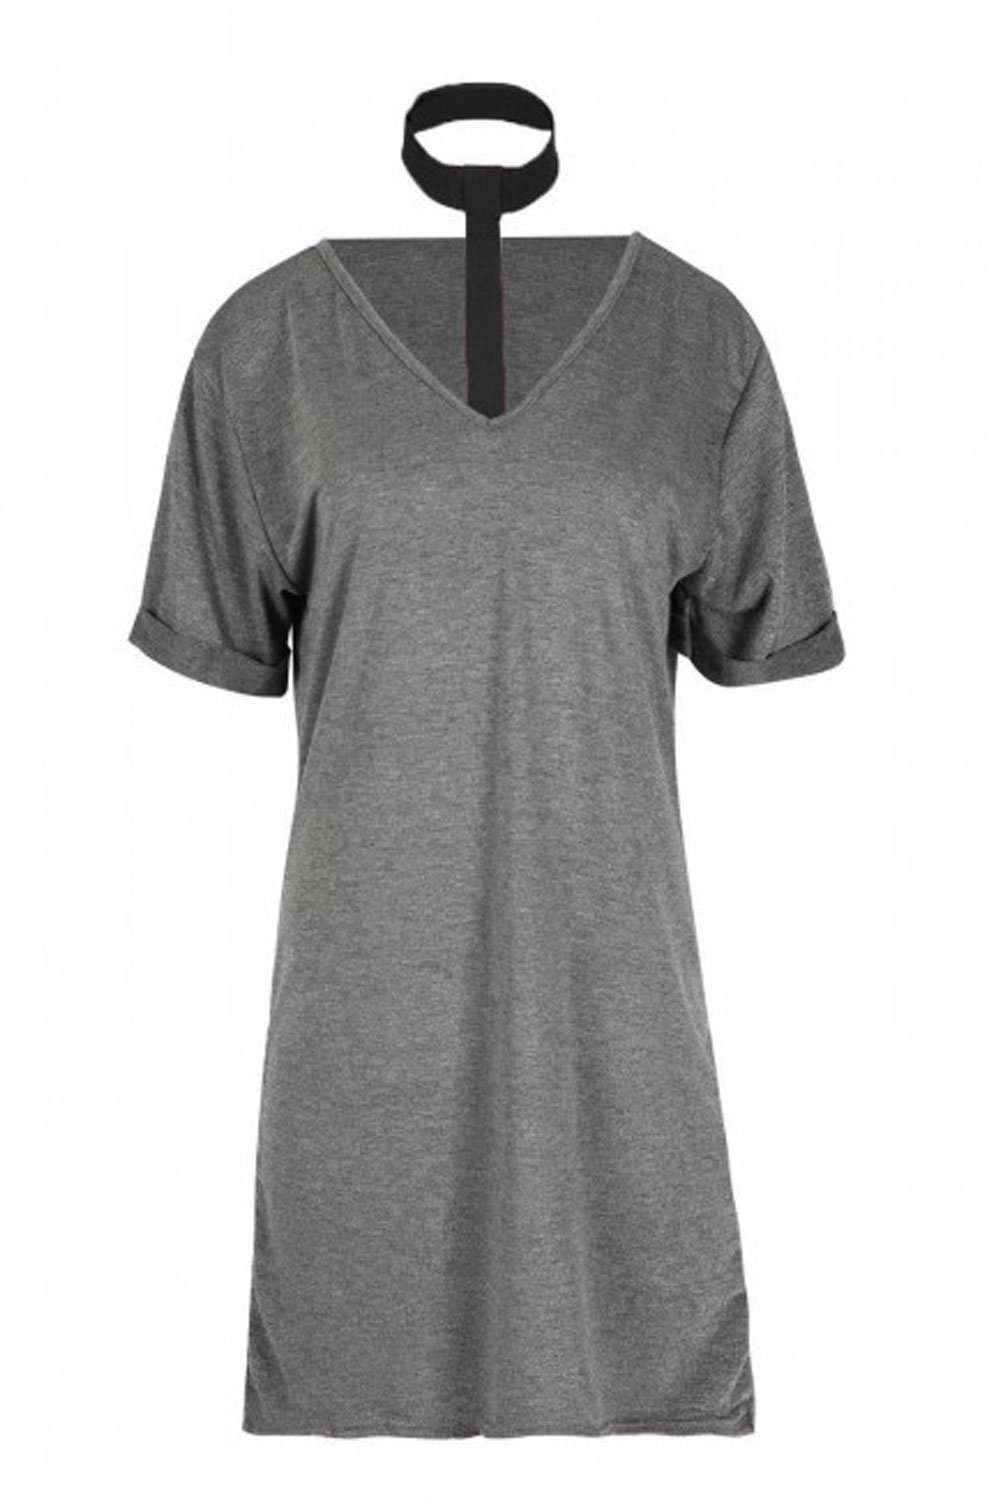 Larna Choker Neck Oversized Jersey Tshirt Dress - bejealous-com